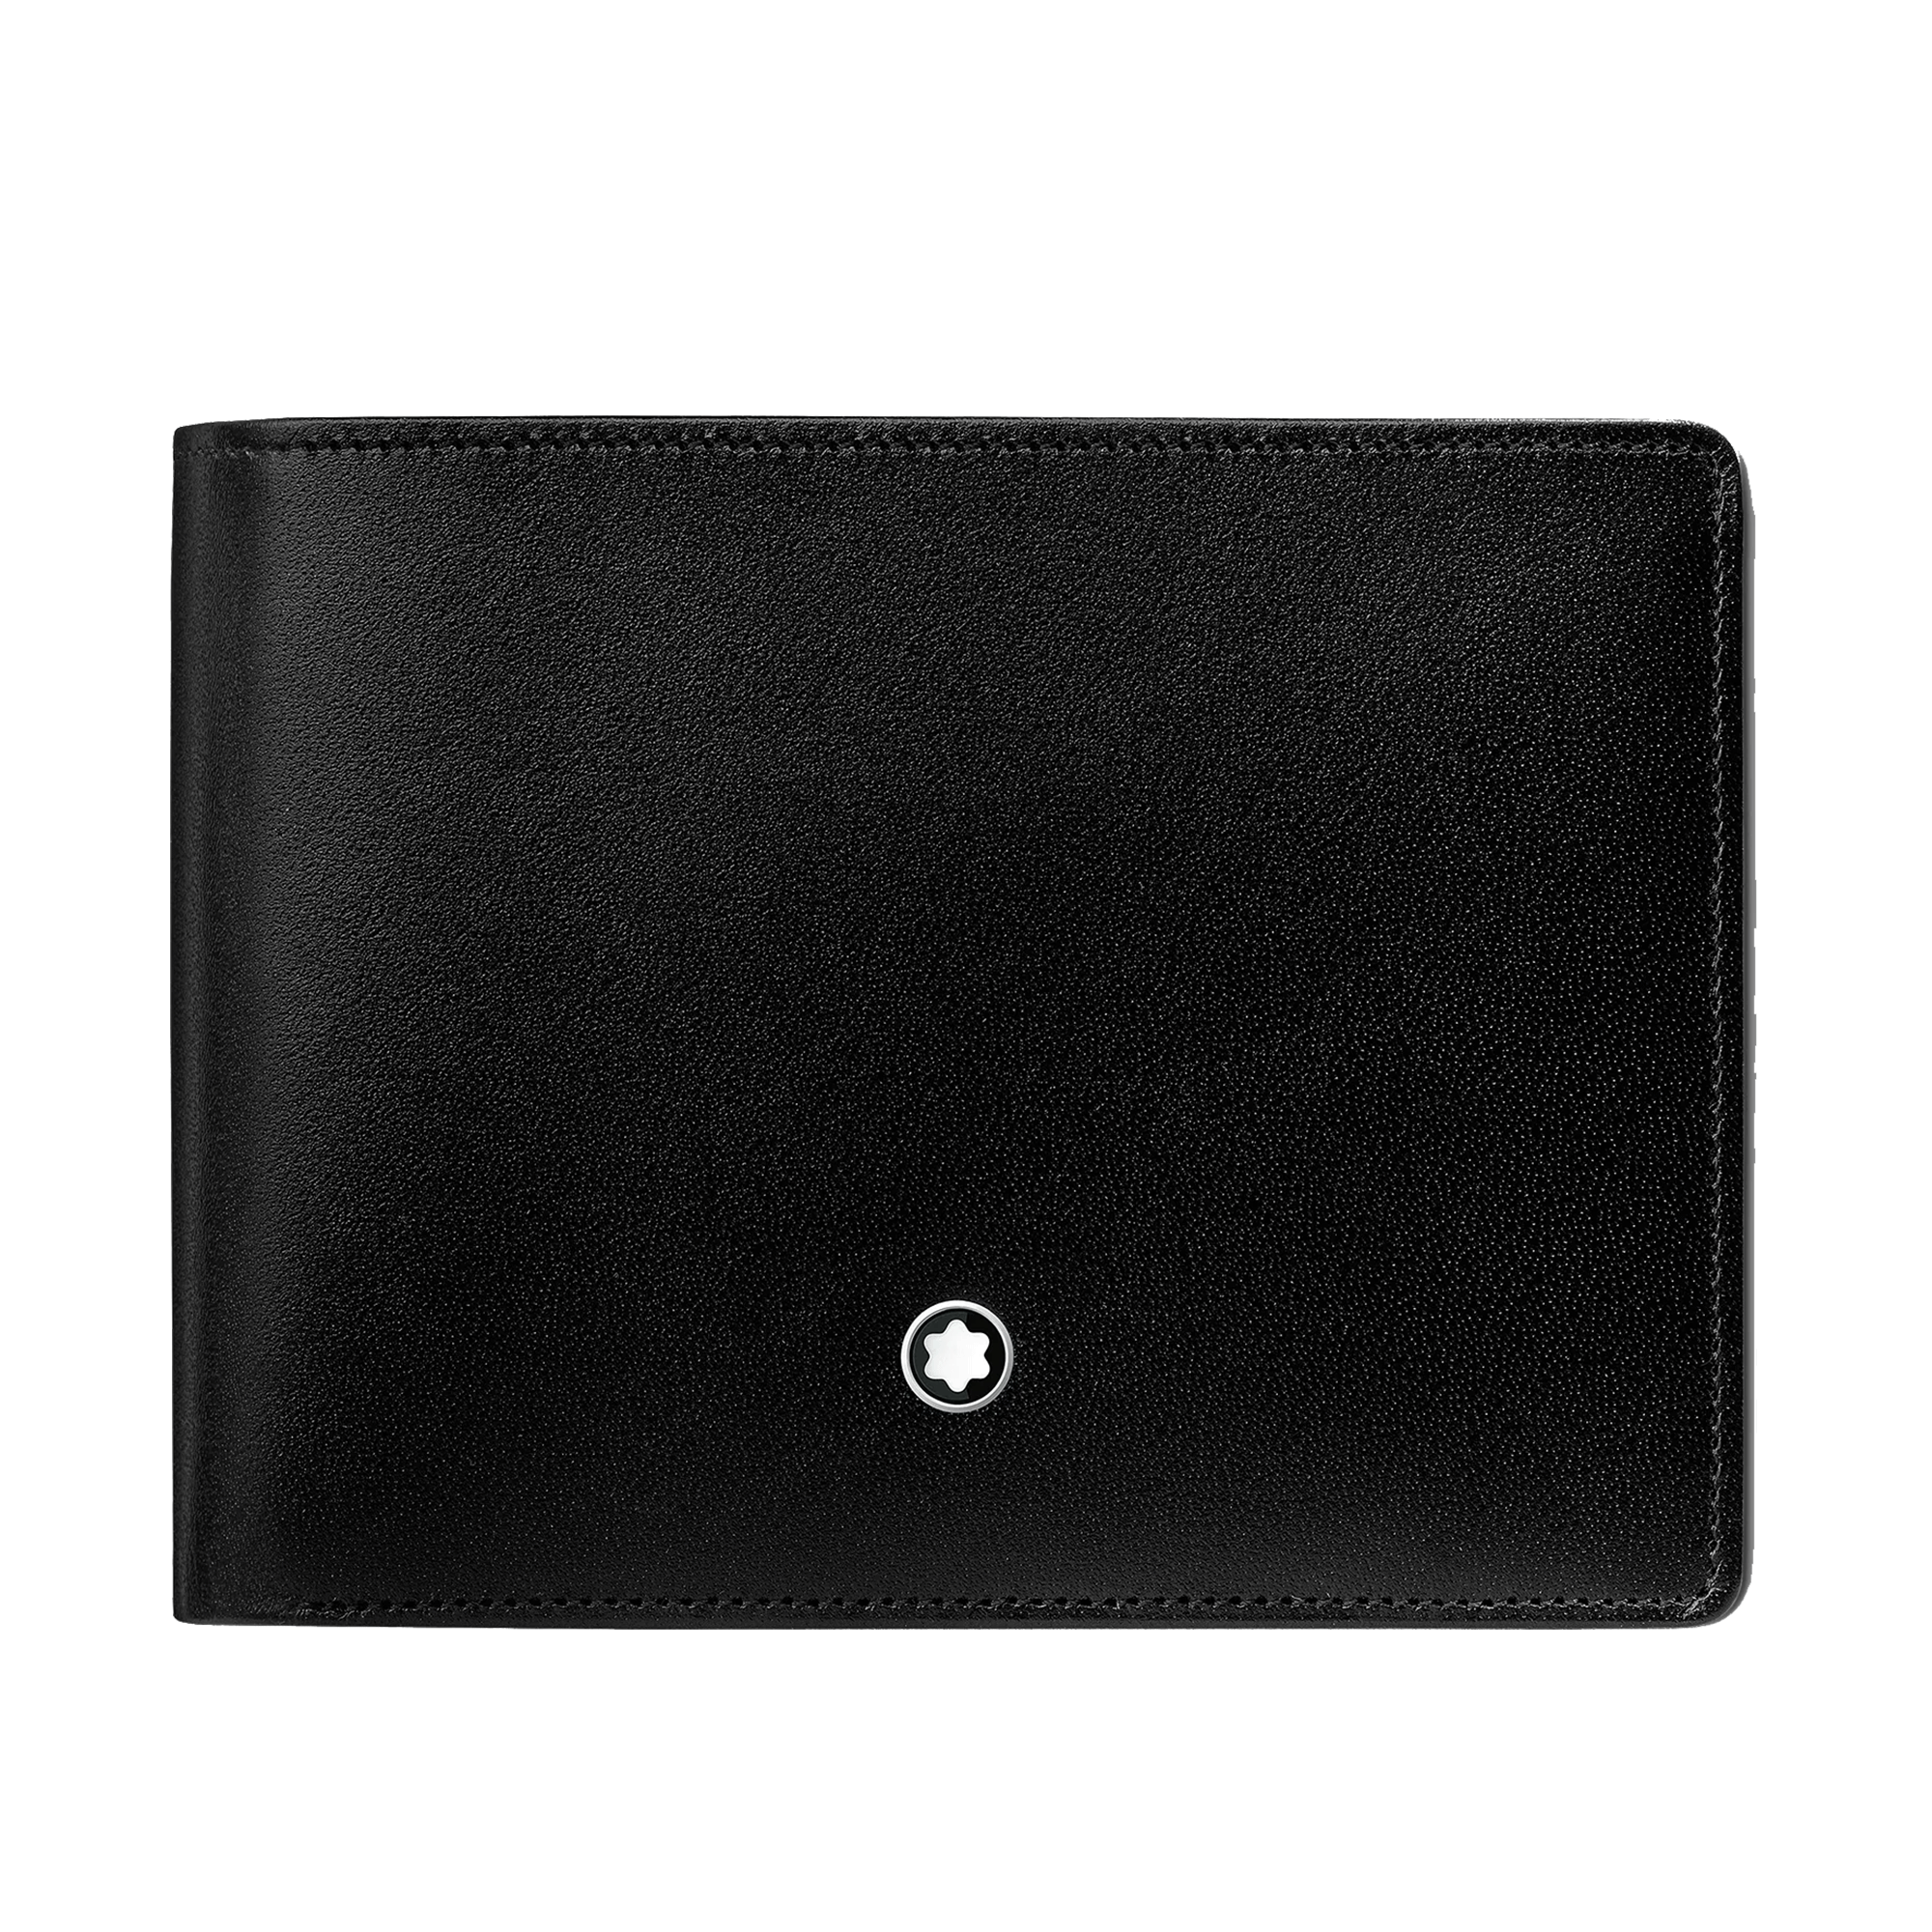 Meisterstuck Wallet 6cc in Black Leather